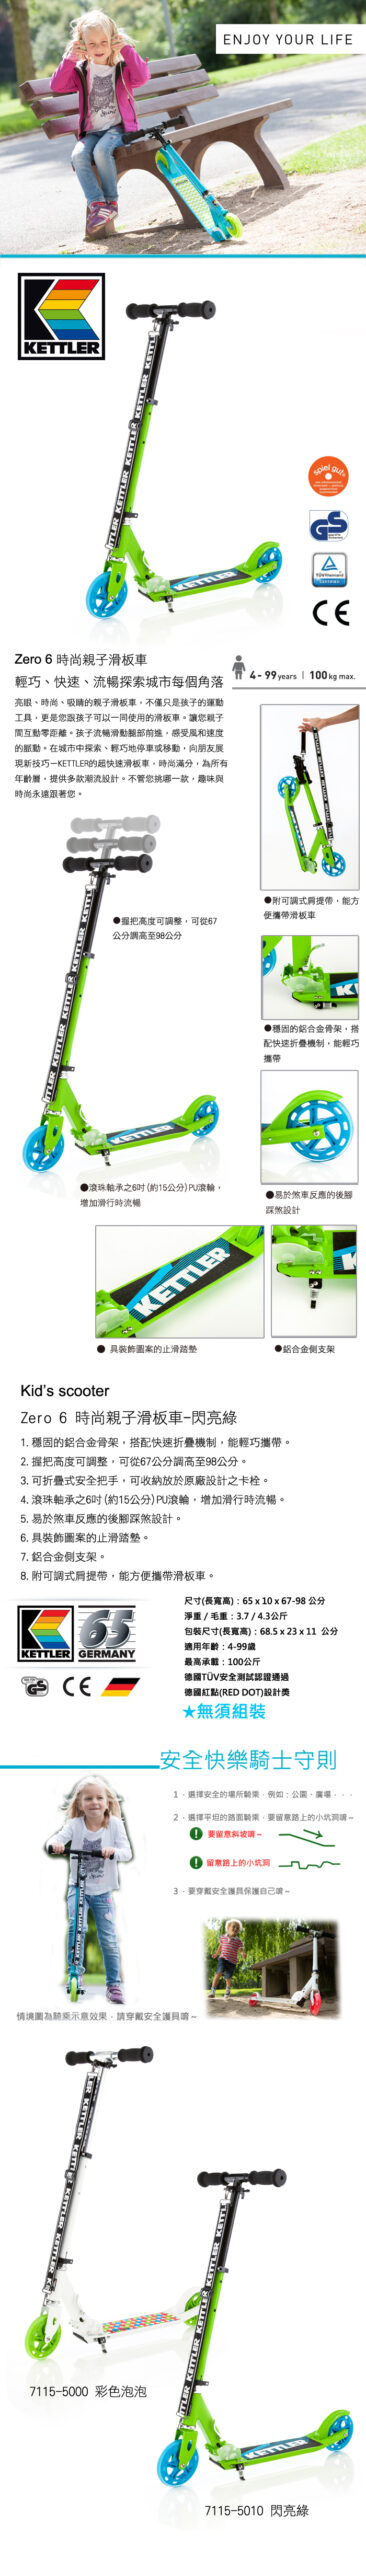 Zero 8 時尚親子滑板車